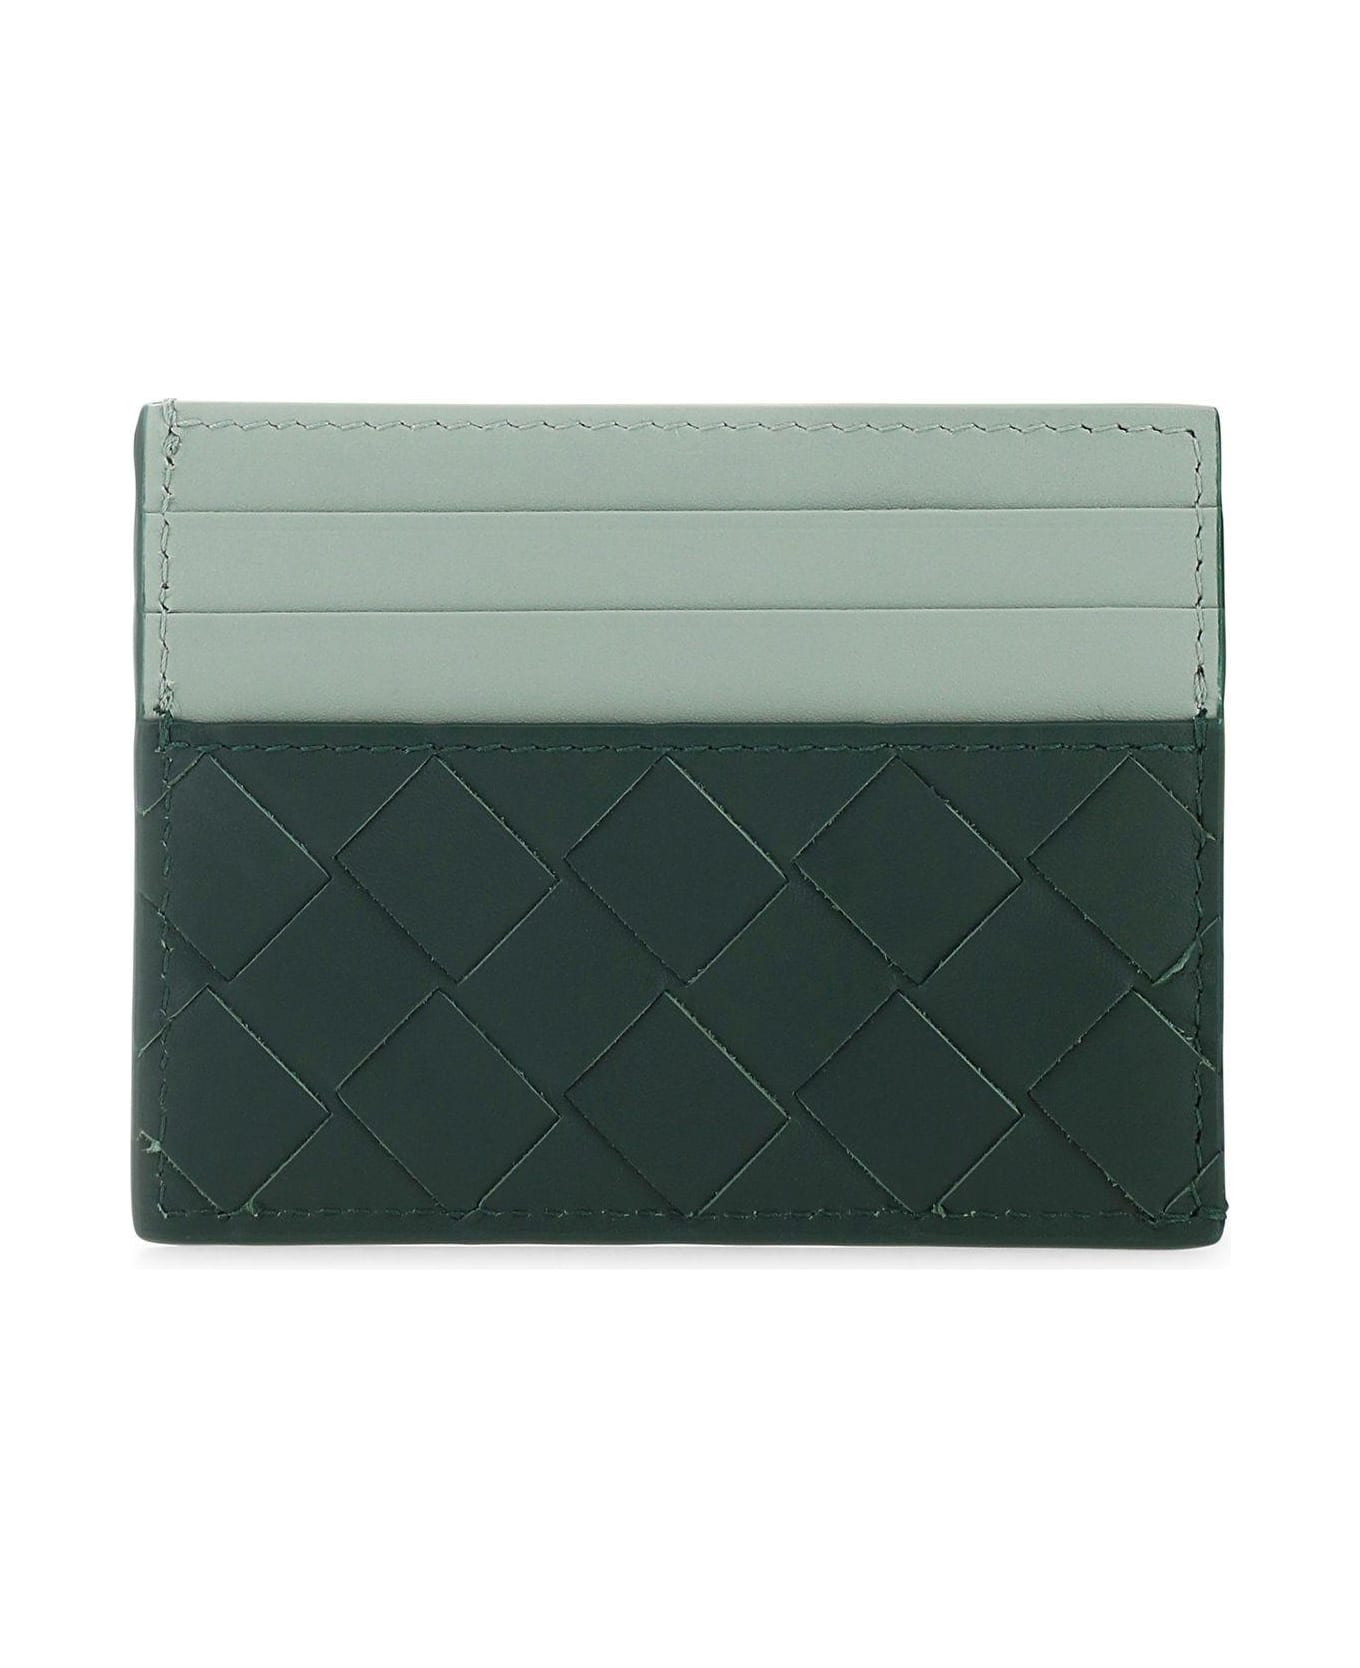 Bottega Veneta Two-tone Leather Card Holder - GREEN